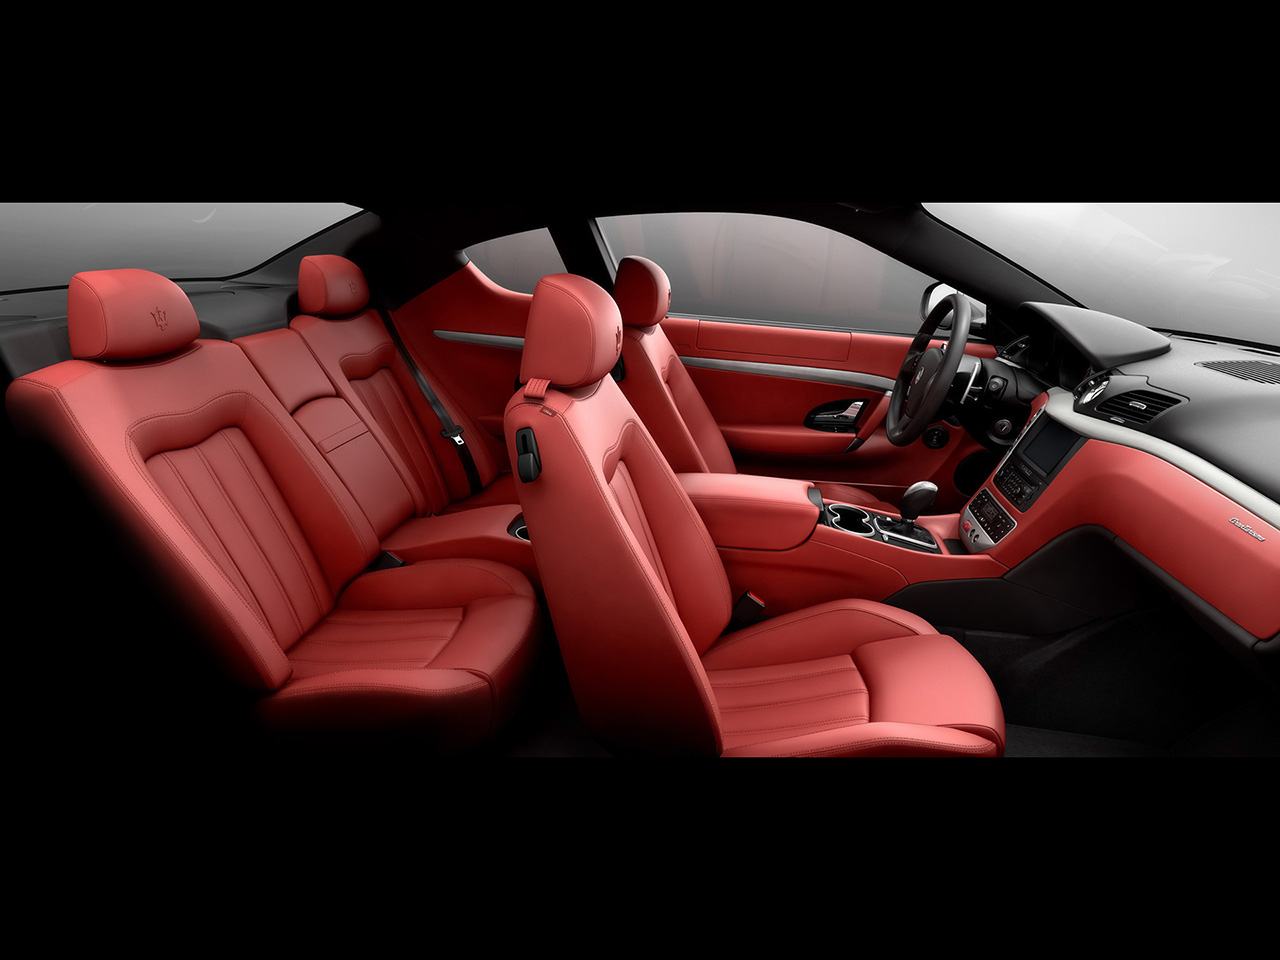 2007-Maserati-GranTurismo-Interior-1280x960.jpg